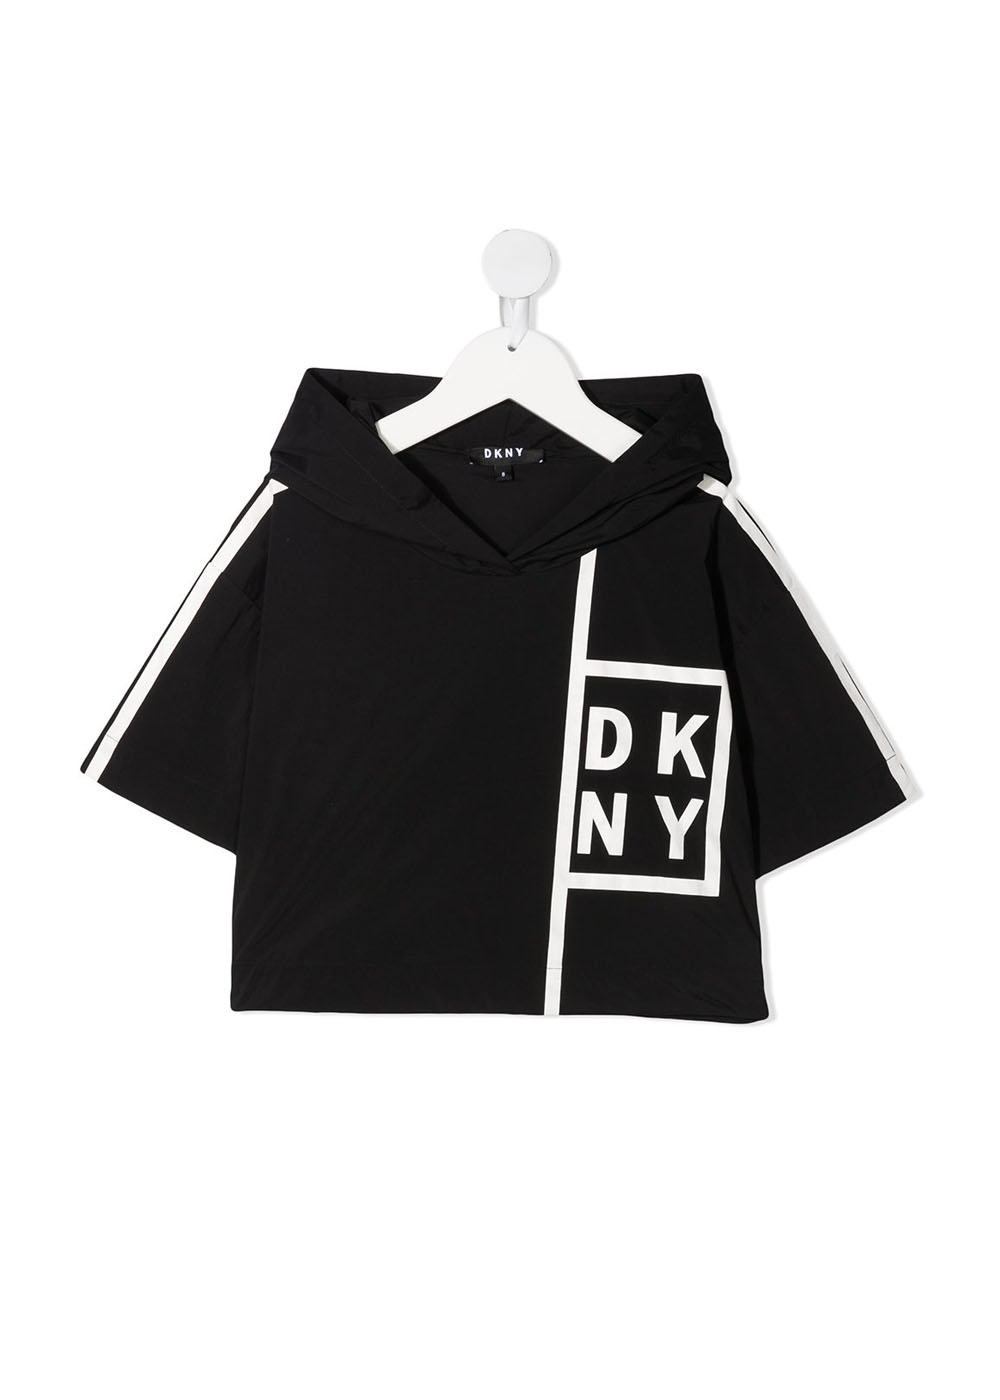 Featured image for “DKNY FELPA CON CAPPUCCIO”